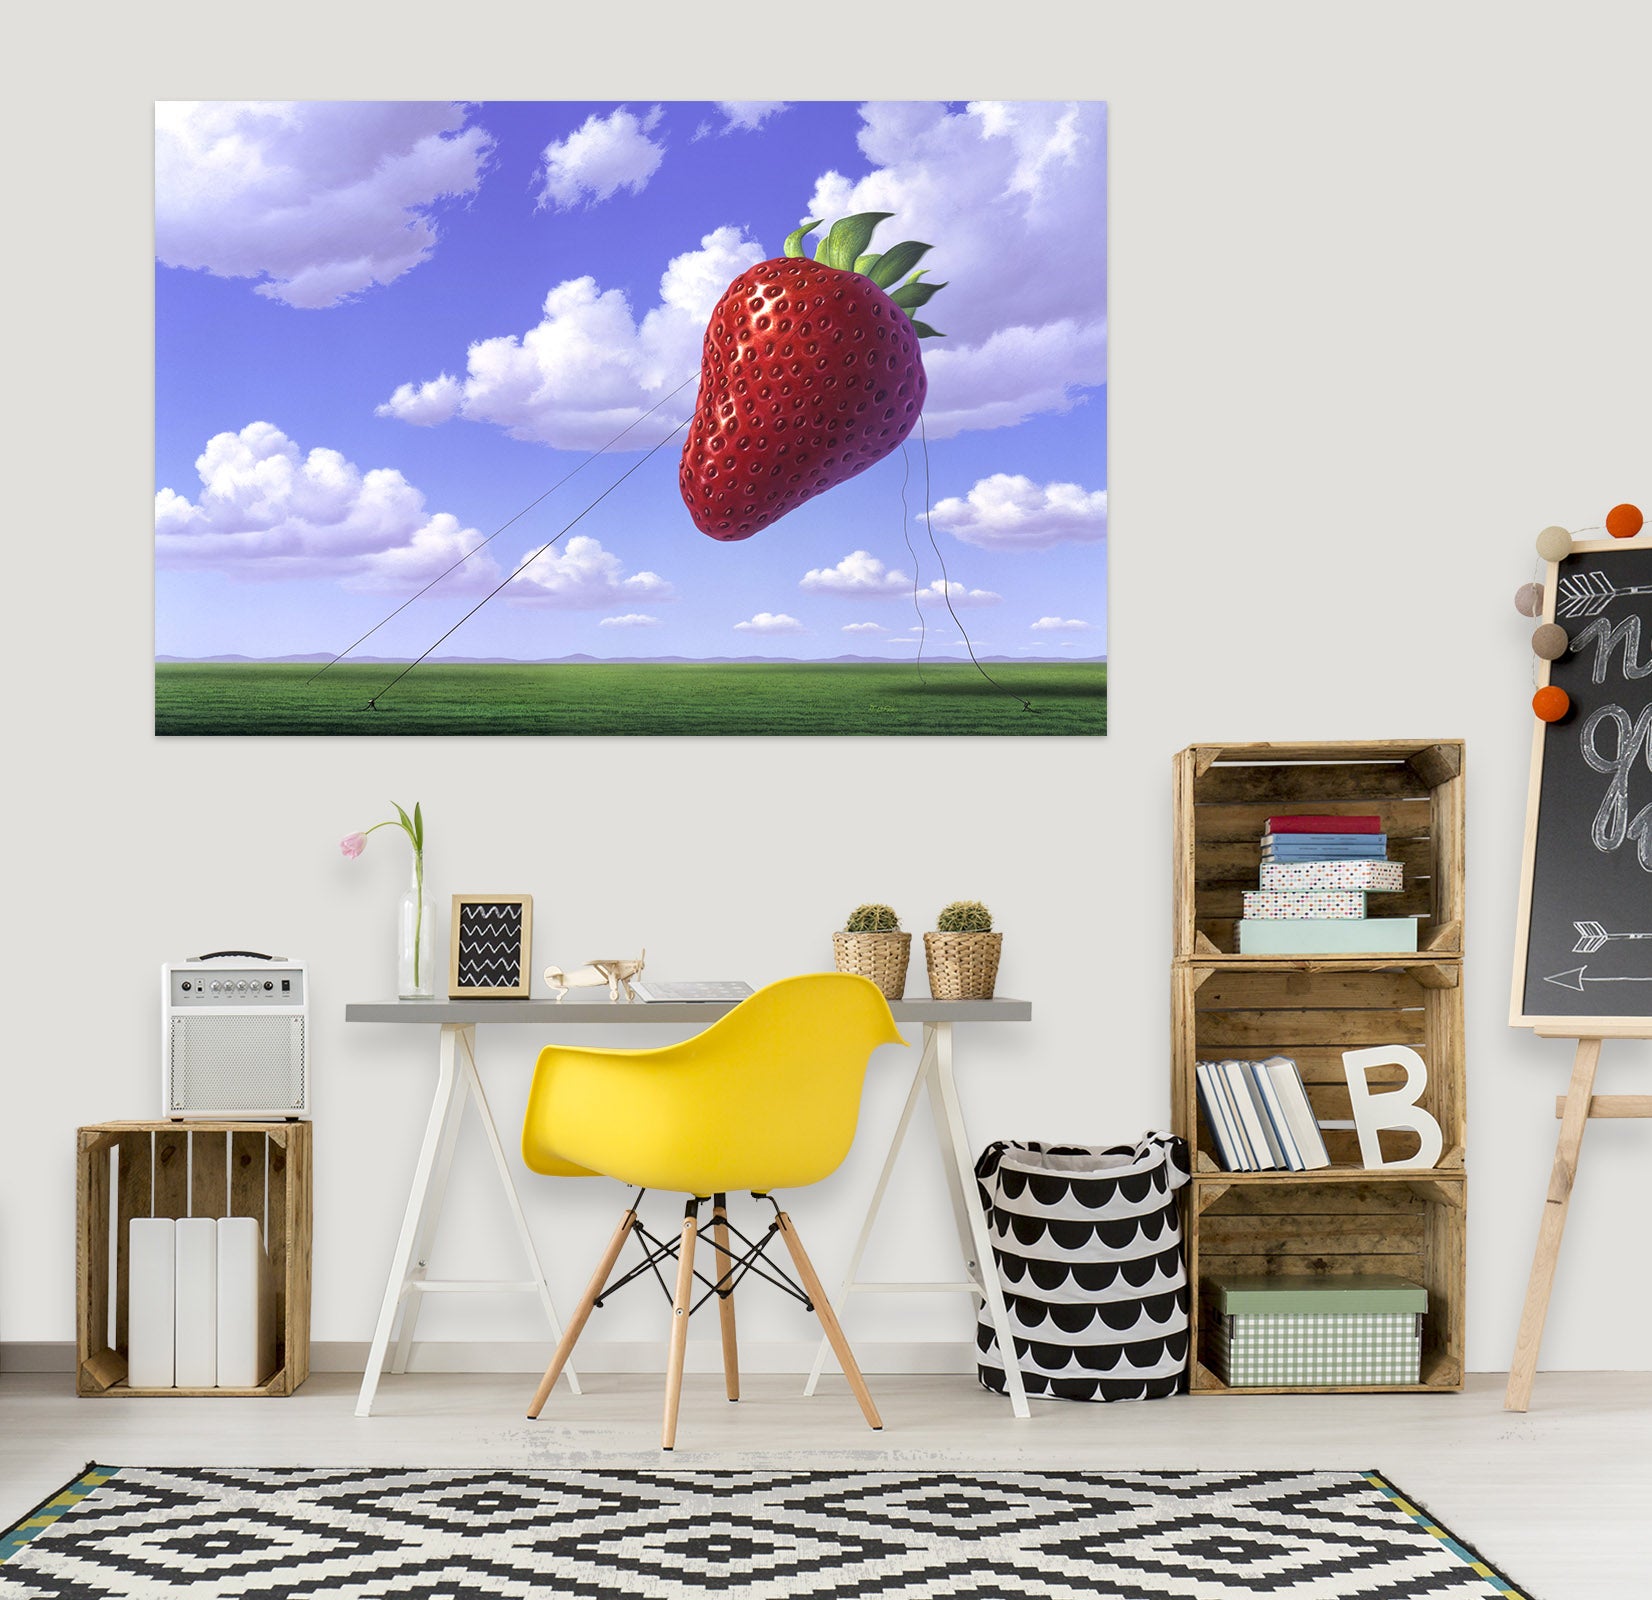 3D Strawberry Field 85165 Jerry LoFaro Wall Sticker